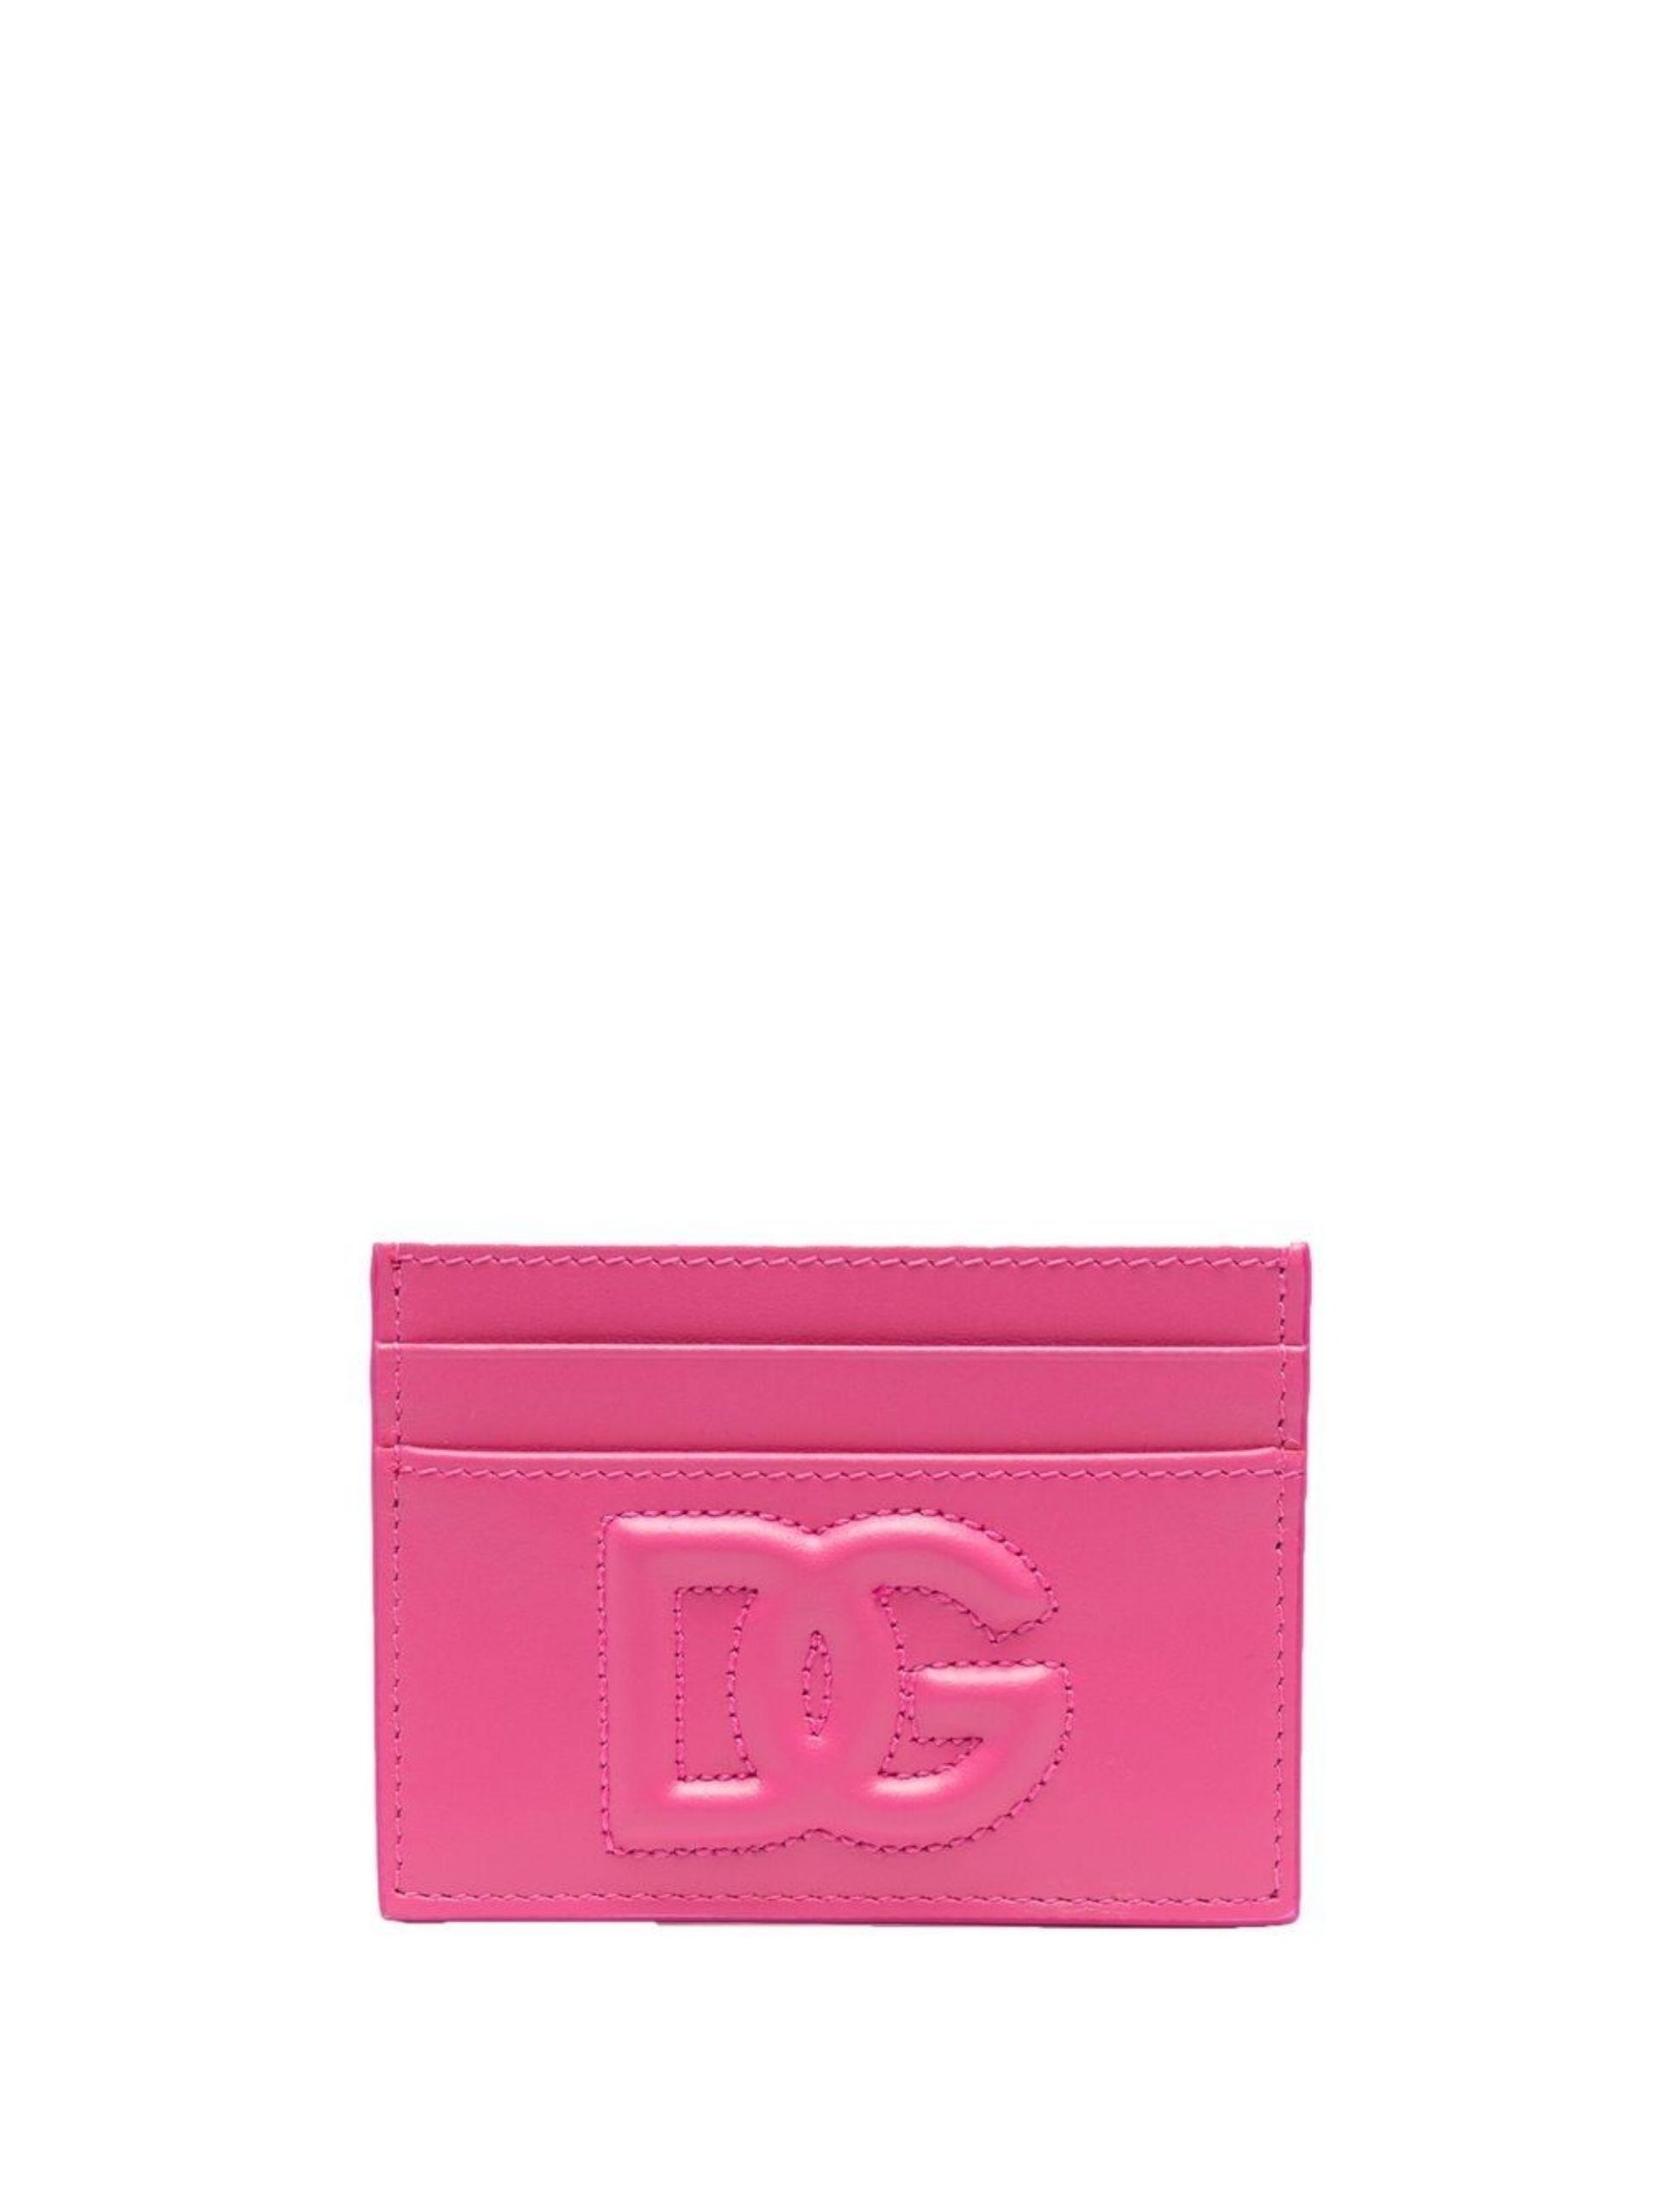 Dolce & Gabbana Dg Logo Leather Card Holder in Pink